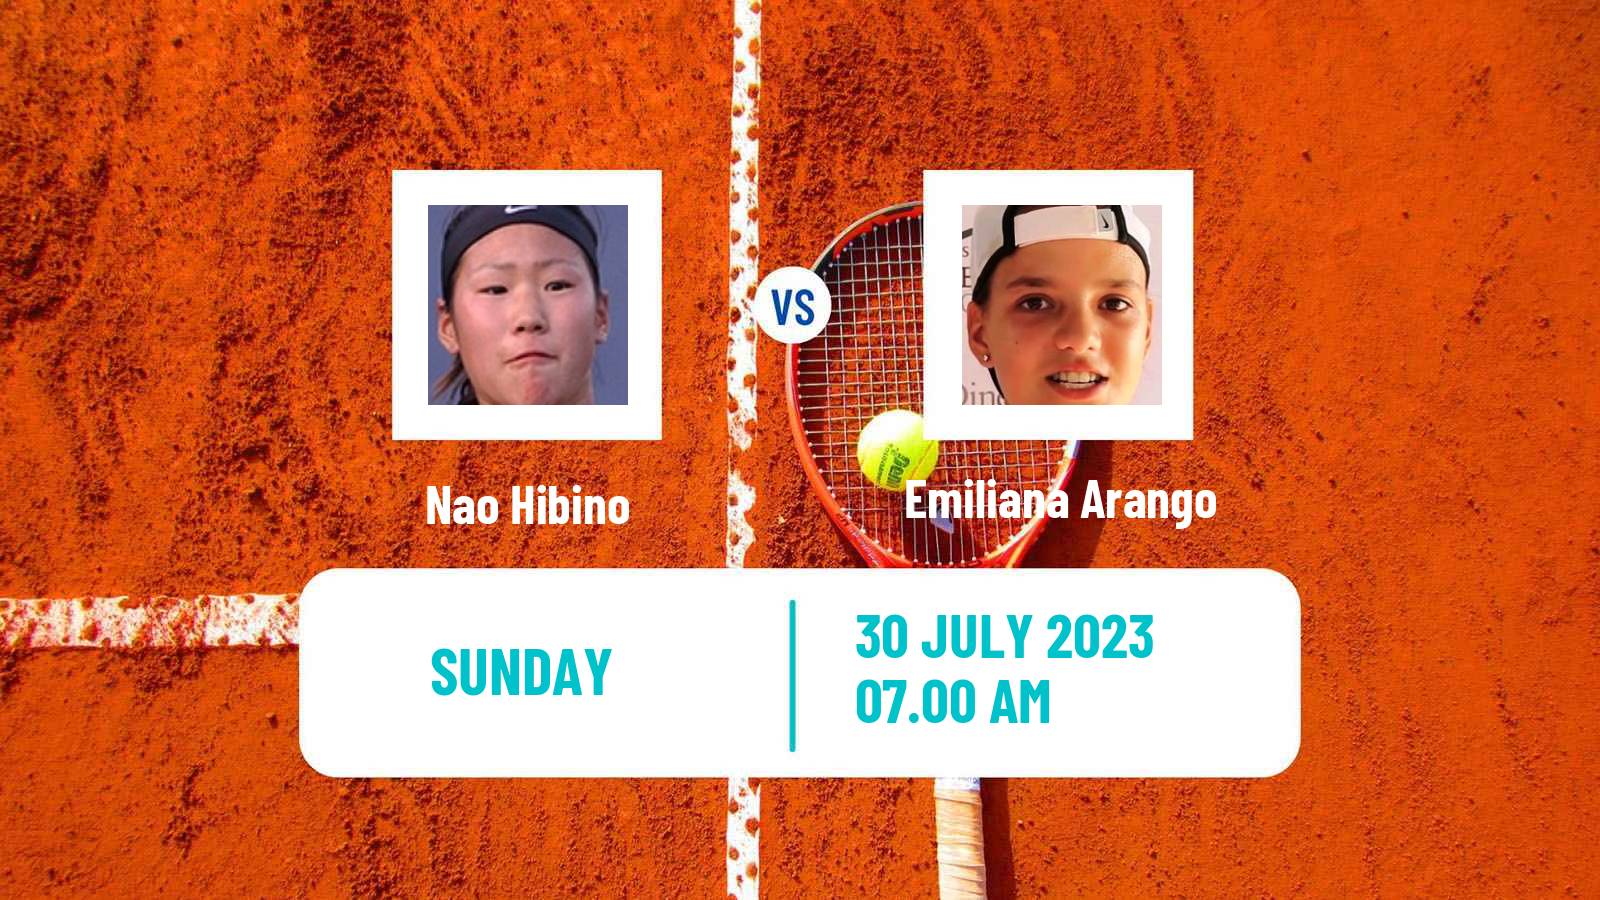 Tennis WTA Prague Nao Hibino - Emiliana Arango